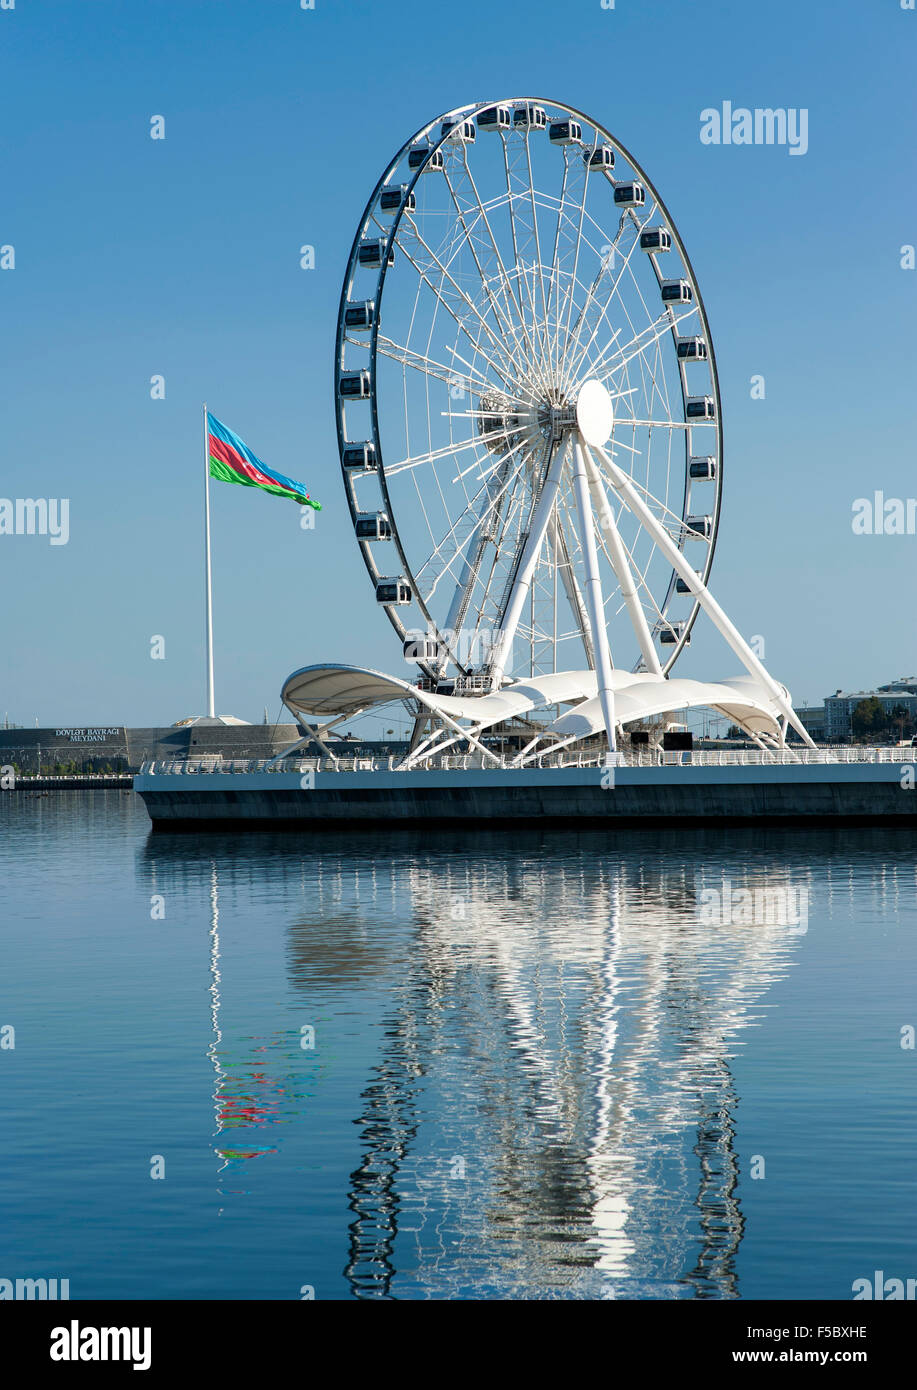 The Baku Eye ferris wheel and the Azerbaijan flag along the Baku seafront. Stock Photo